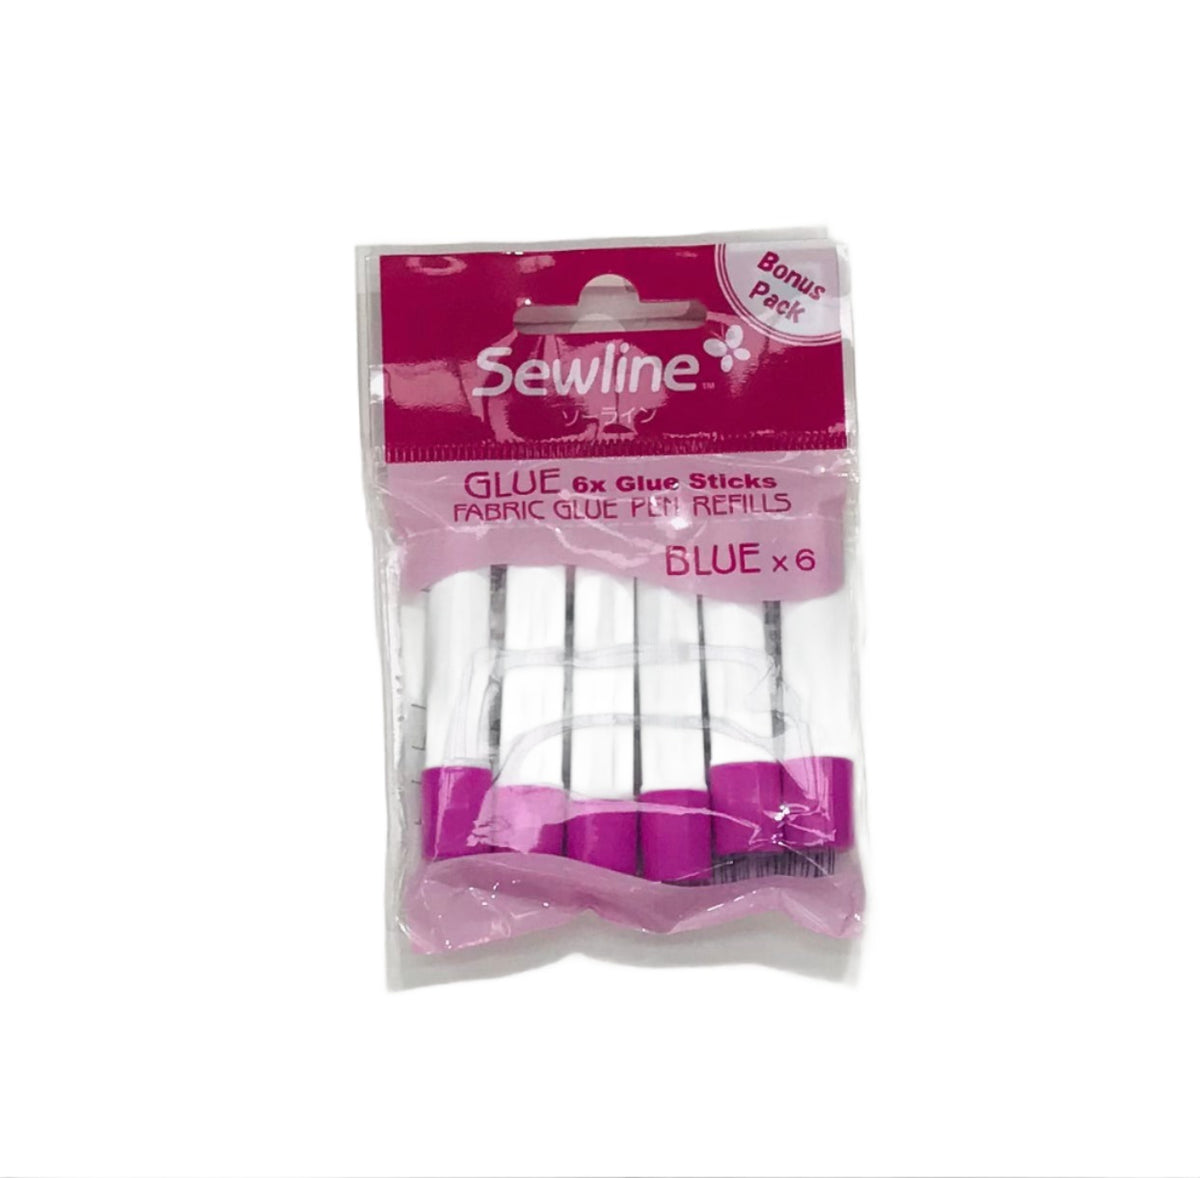 Sweline Fabric Glue Pen Refills (2- Pack)